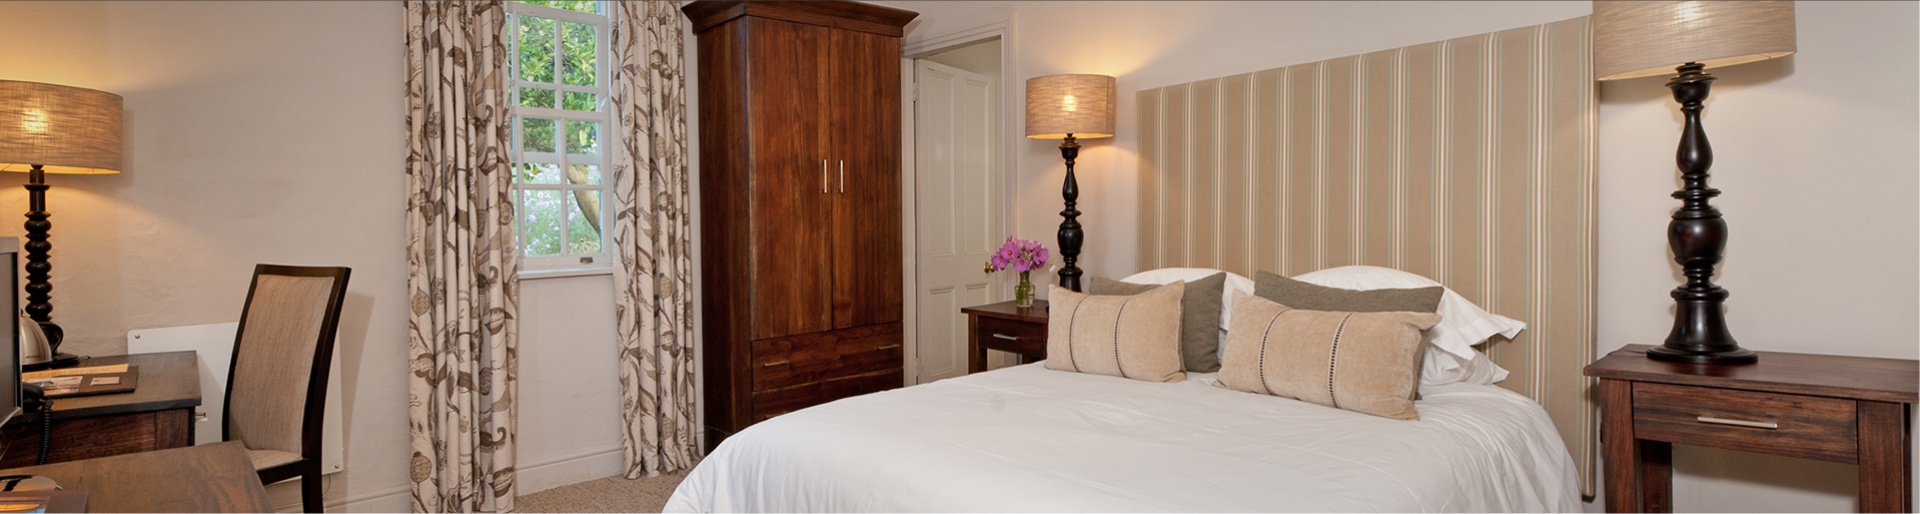 Dedoornkraal Riversdale Accommodation Luxury Rooms